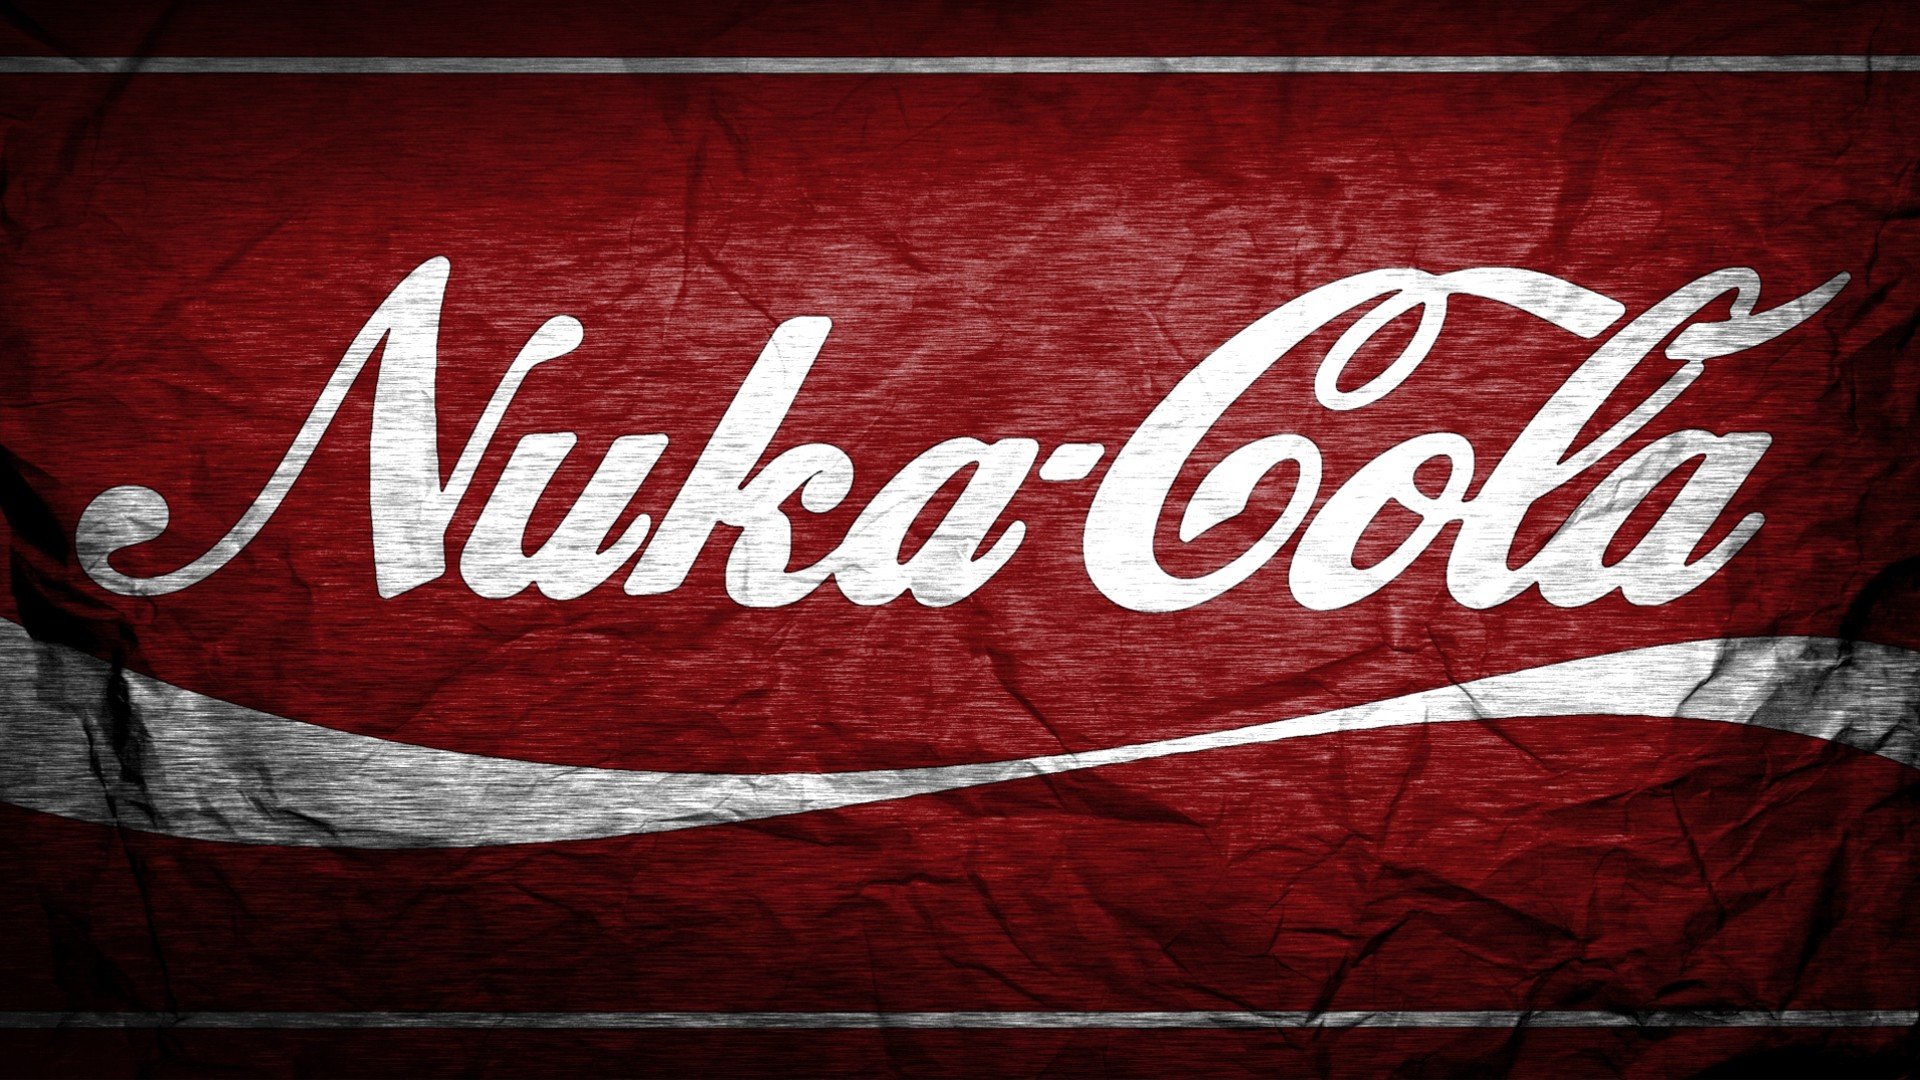 Download 1080p Nuka Cola desktop background ID:207295 for free